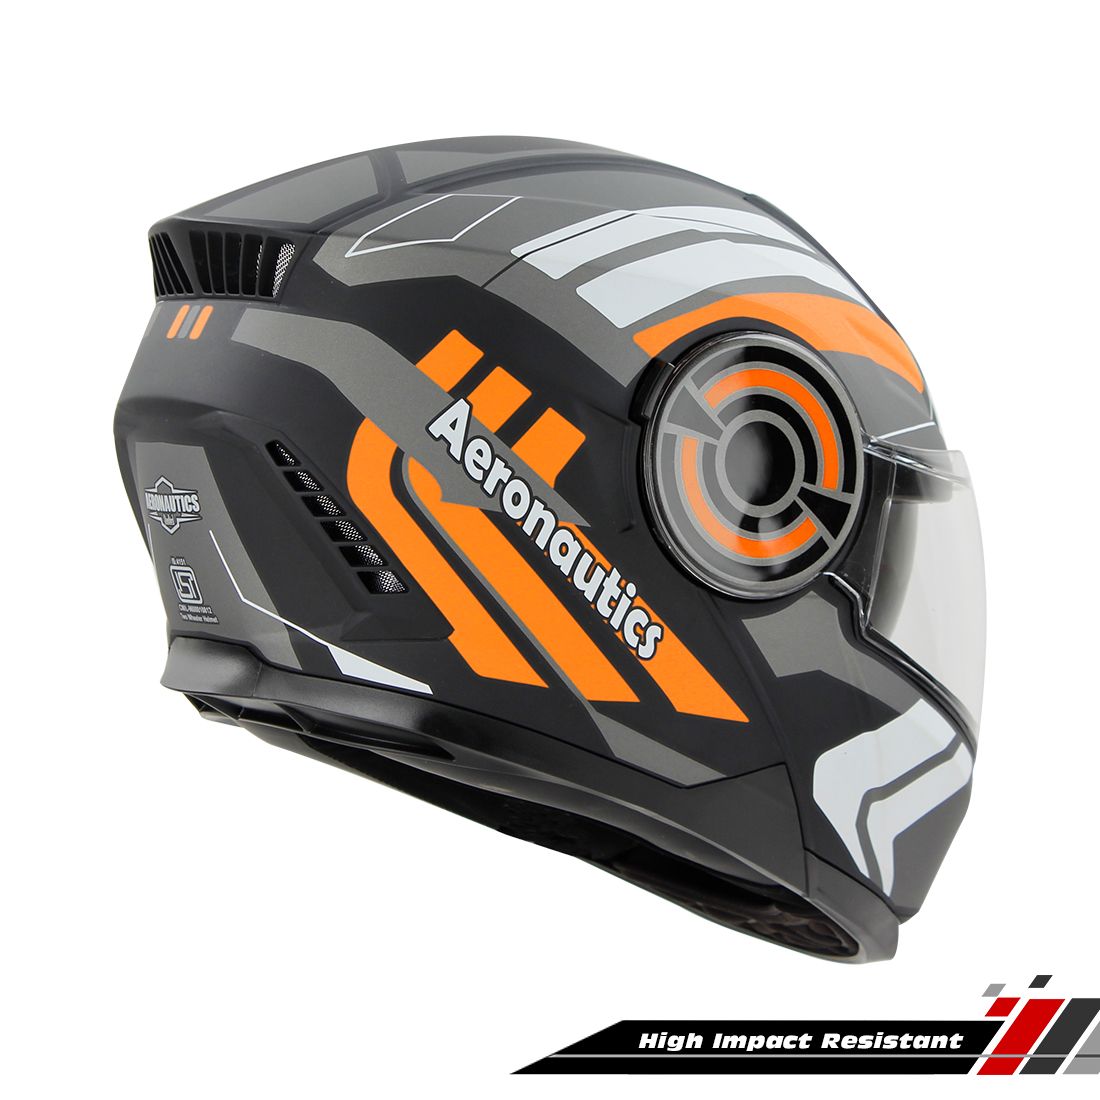 Steelbird SBH-40 Vanguard ISI Certified Full Face Graphic Helmet For Men And Women With Inner Sun Shield (Matt Black Orange)